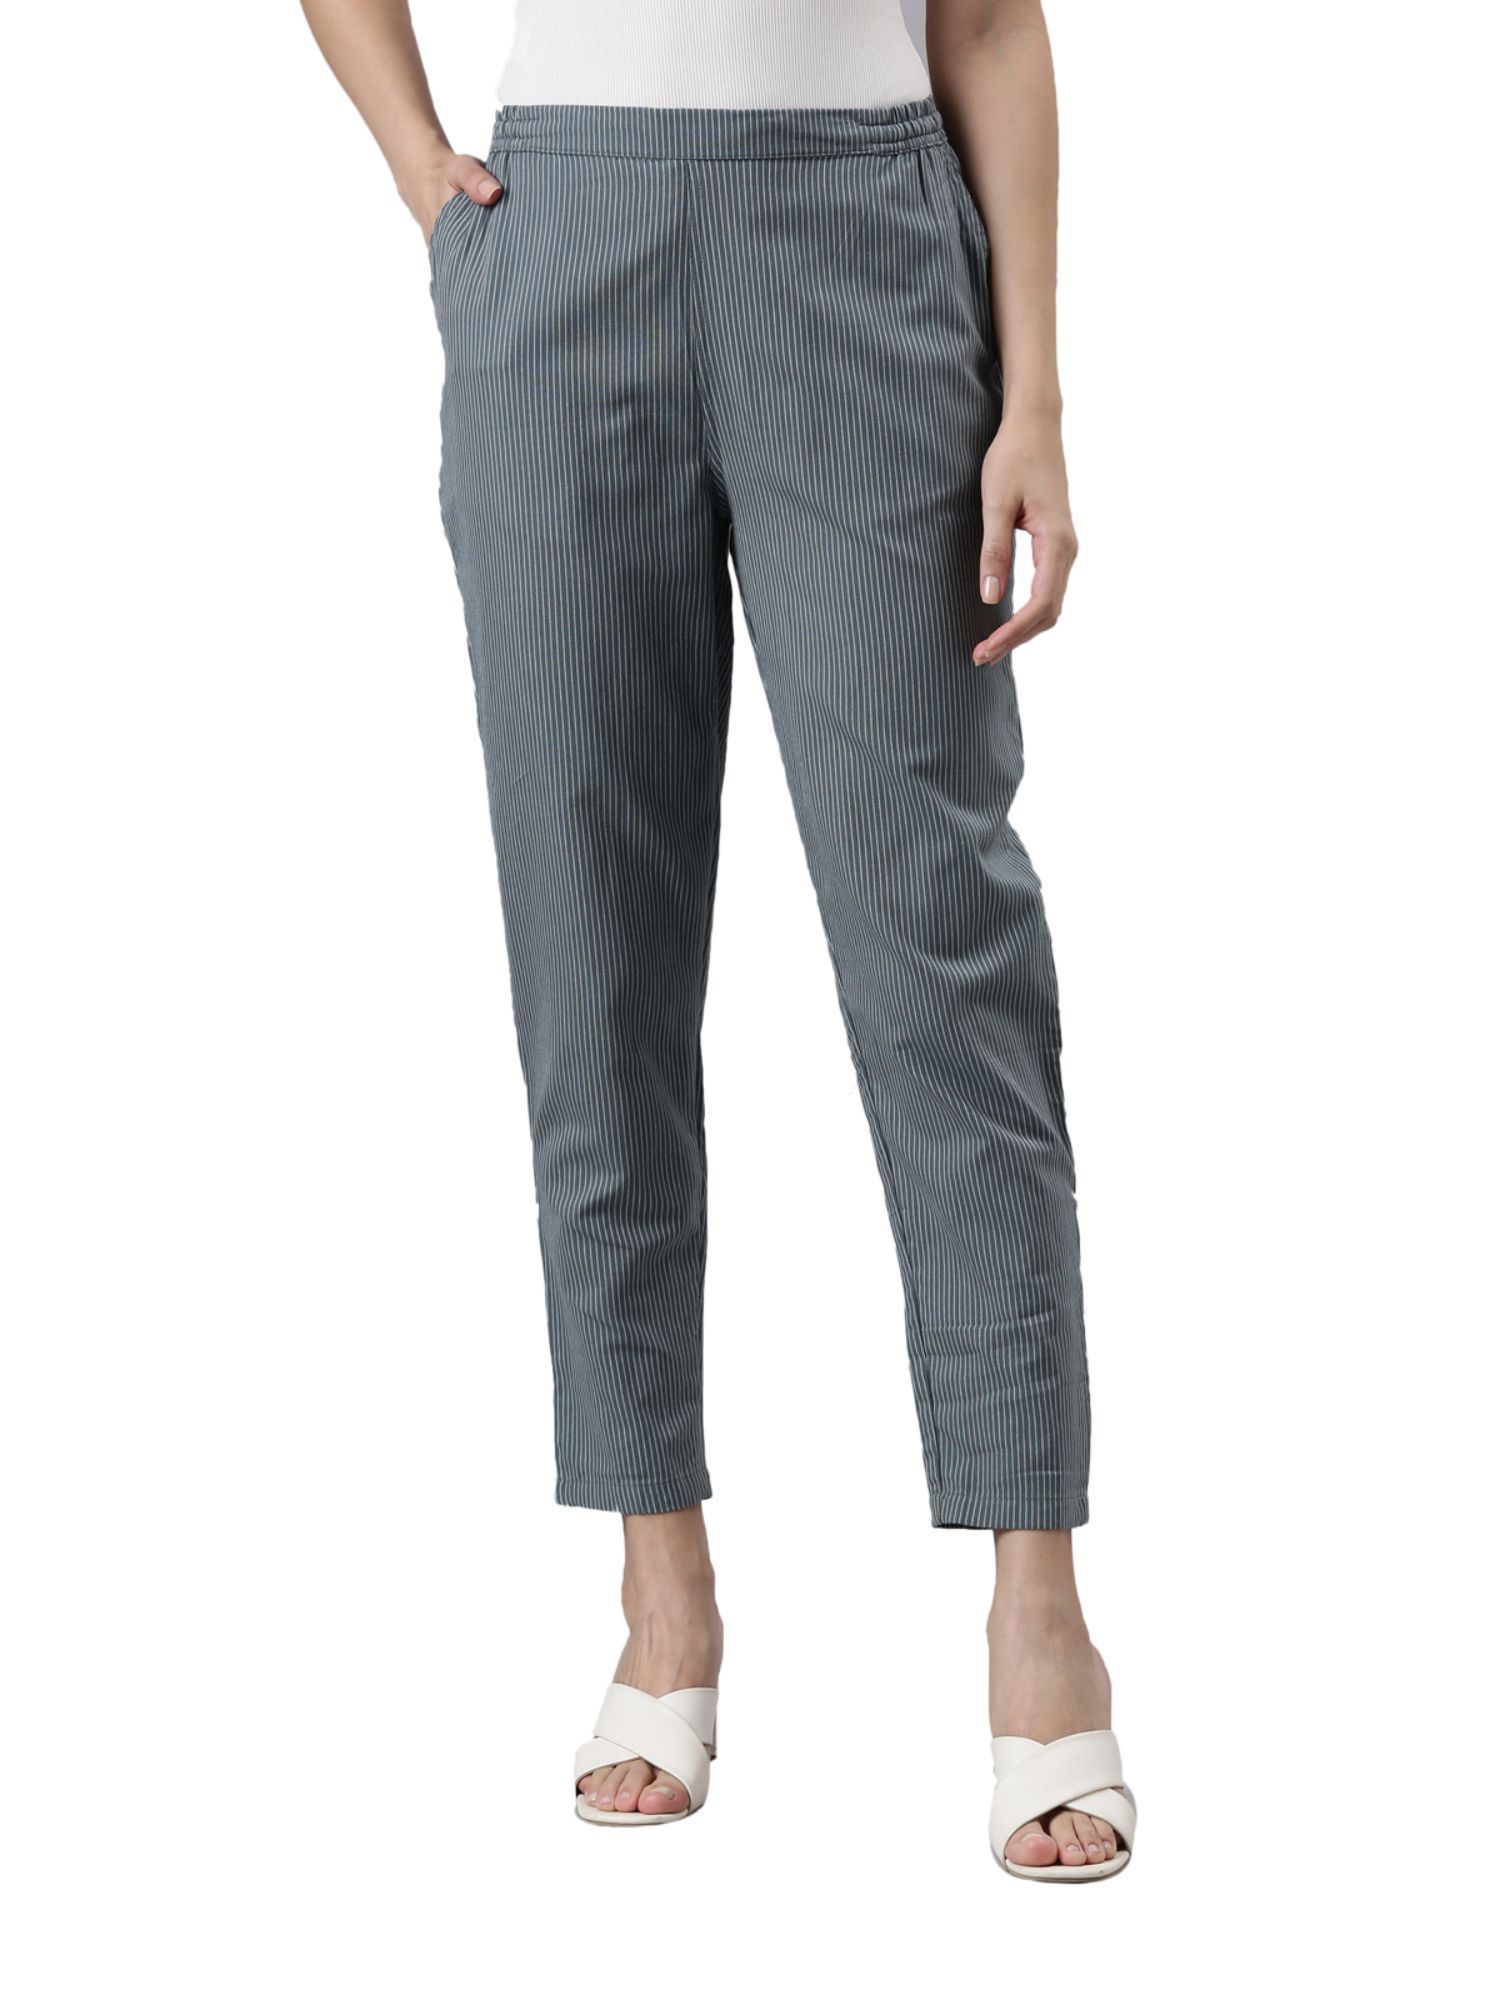 Khadda-Women Cotton Flex/Khadi Pants/Trousers. Rani Color, Pack(1 Pant).